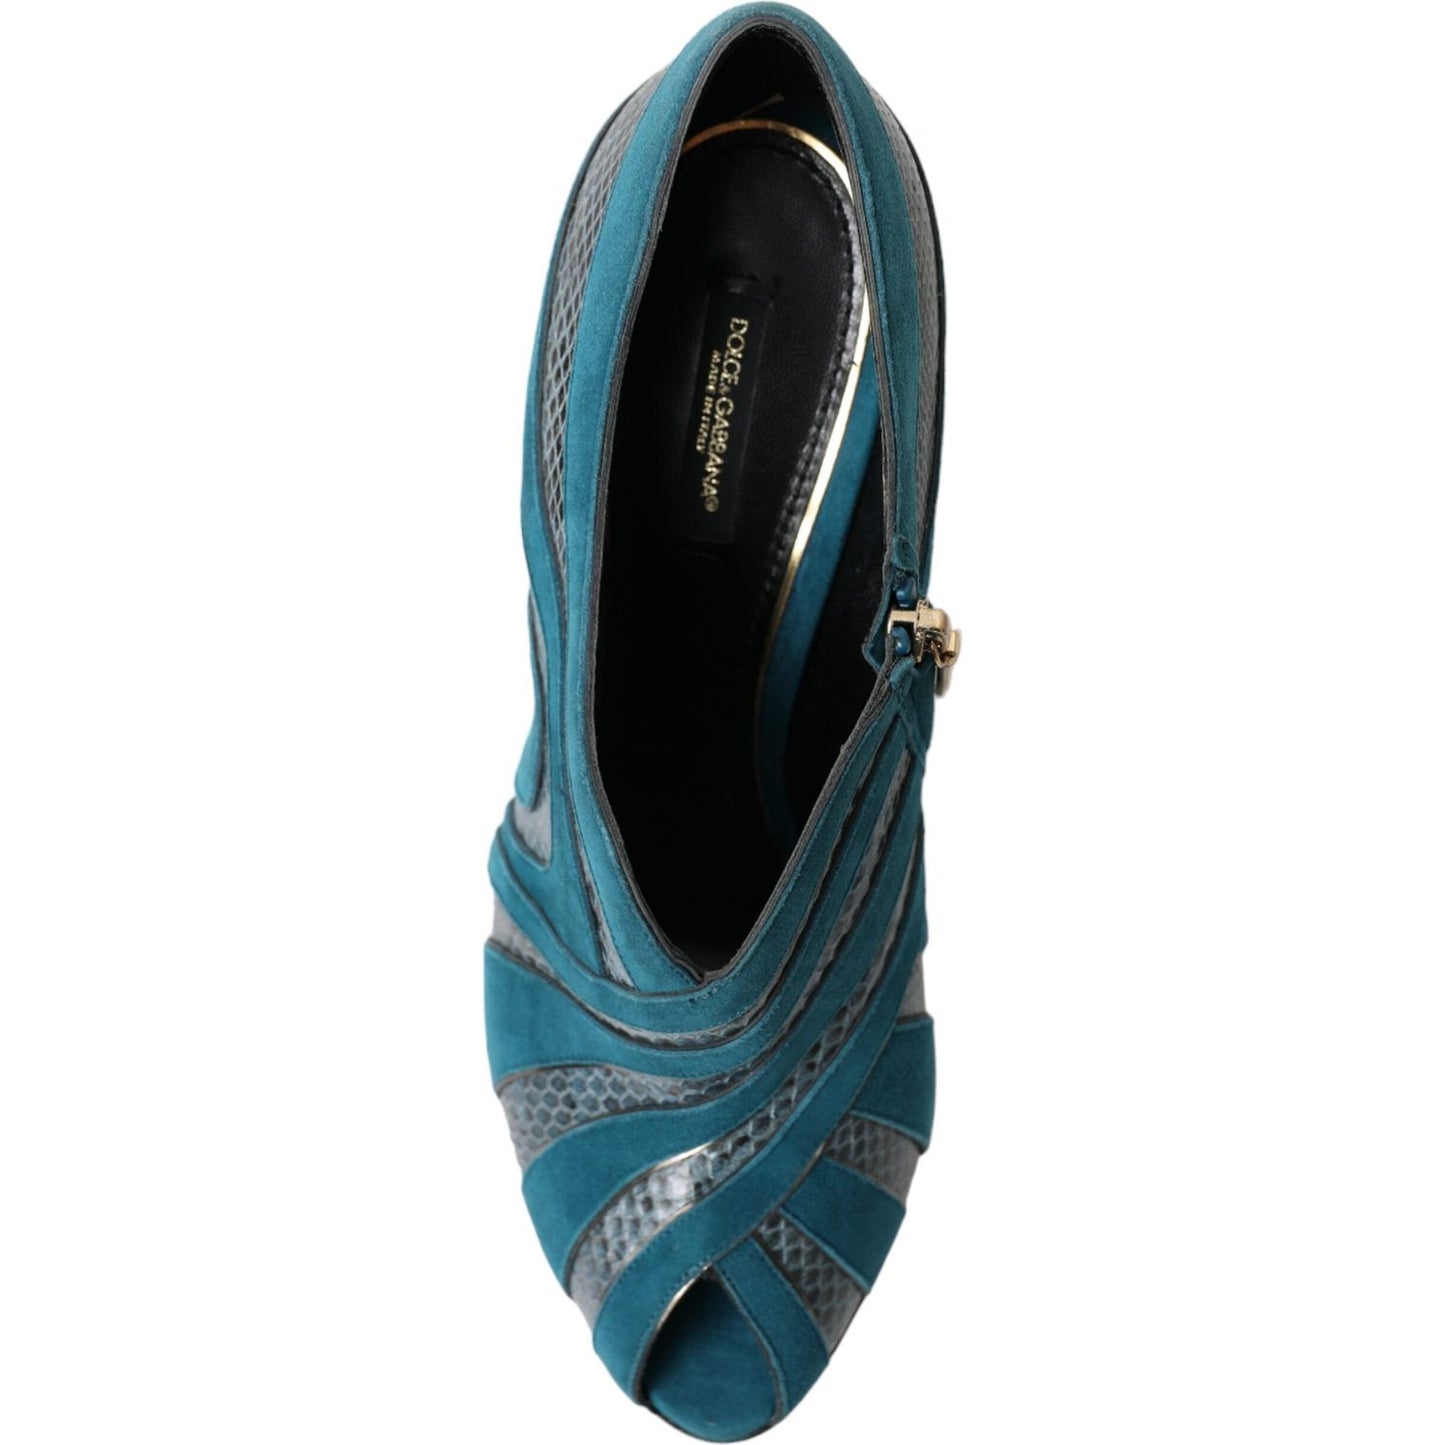 Dolce & Gabbana Teal Suede Peep Toe Heels Pumps teal-suede-leather-peep-toe-heels-pumps-shoes